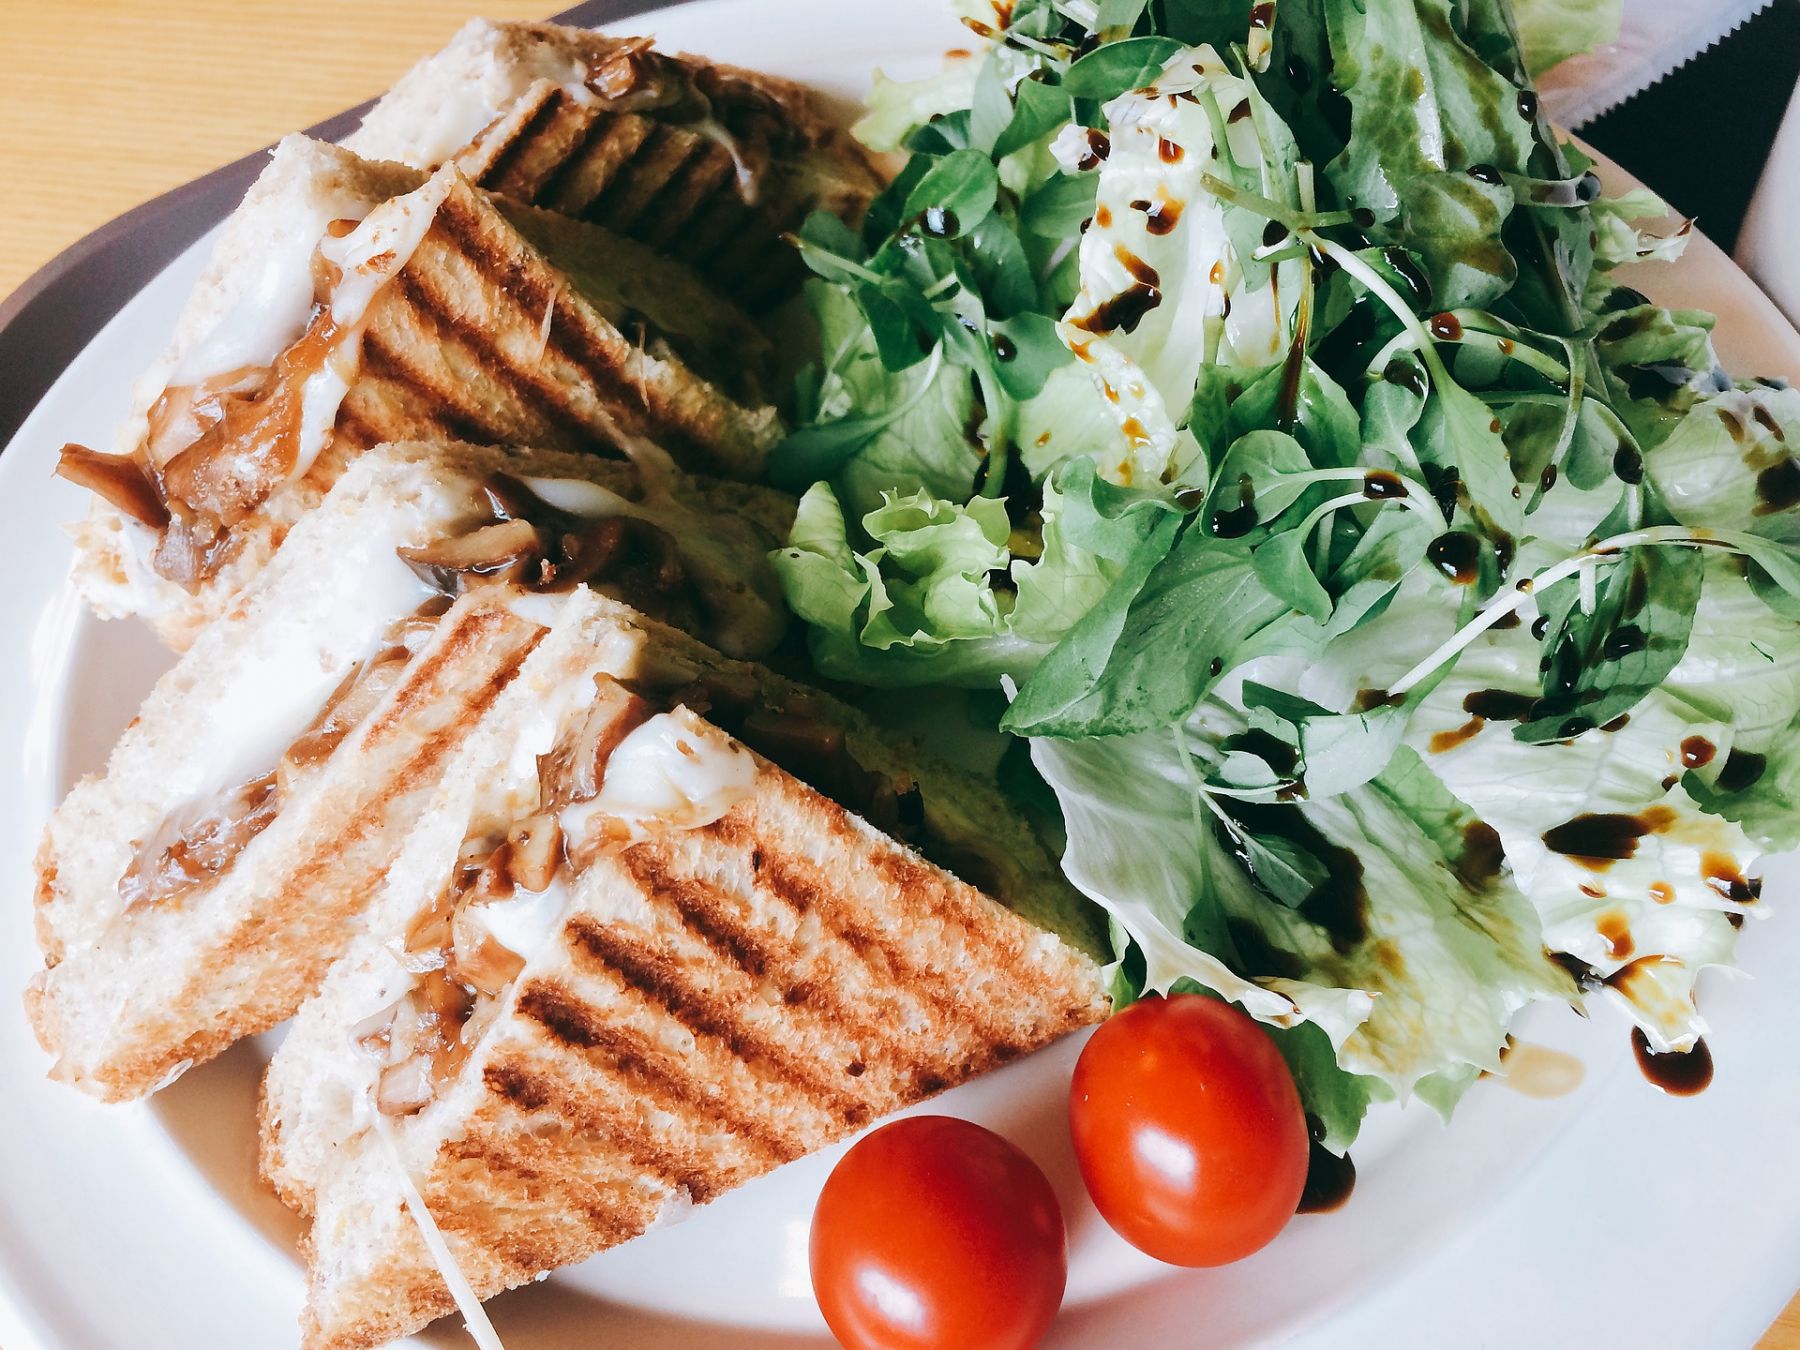 Sandwich + Salads